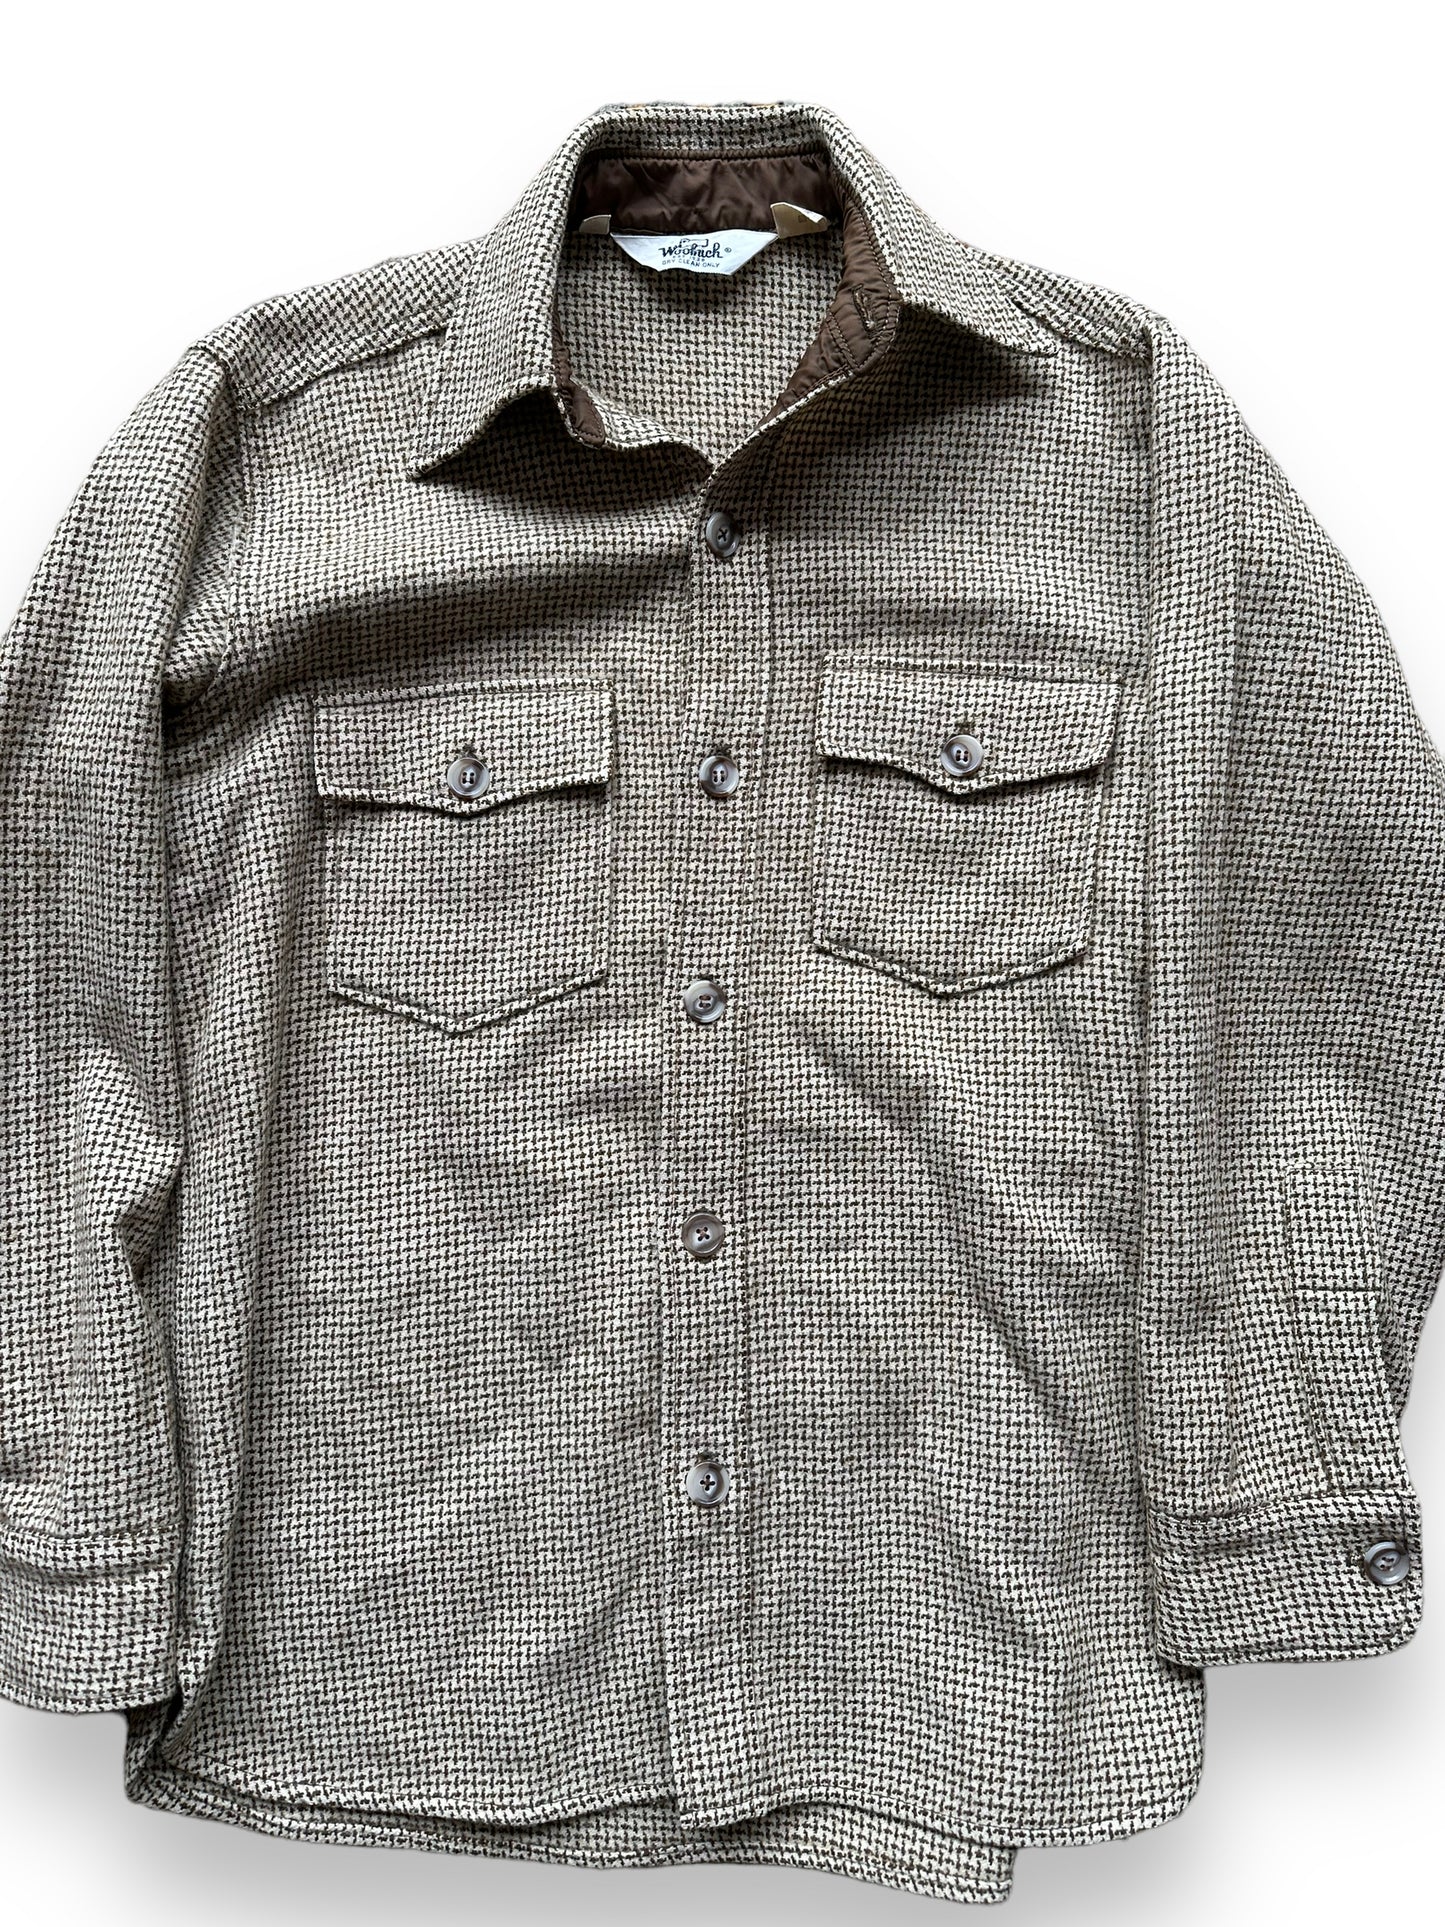 Front Detail on Vintage Tan Houndstooth Woolrich Shirt Jacket SZ M |  Barn Owl Vintage Goods | Vintage Workwear Seattle